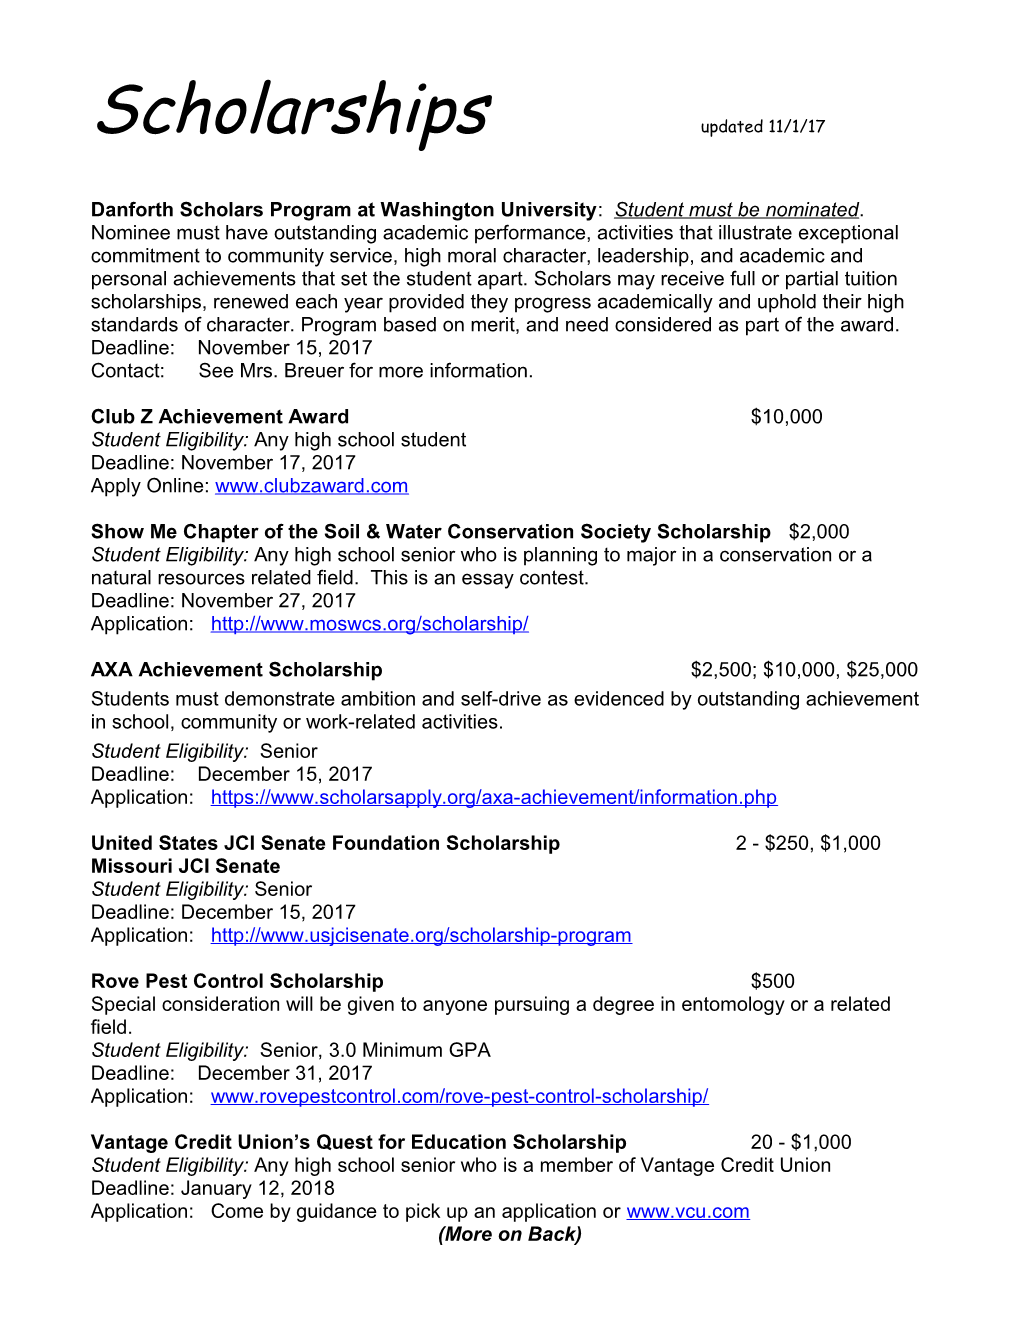 Danforth Scholars Program at Washington University : Student Must Be Nominated